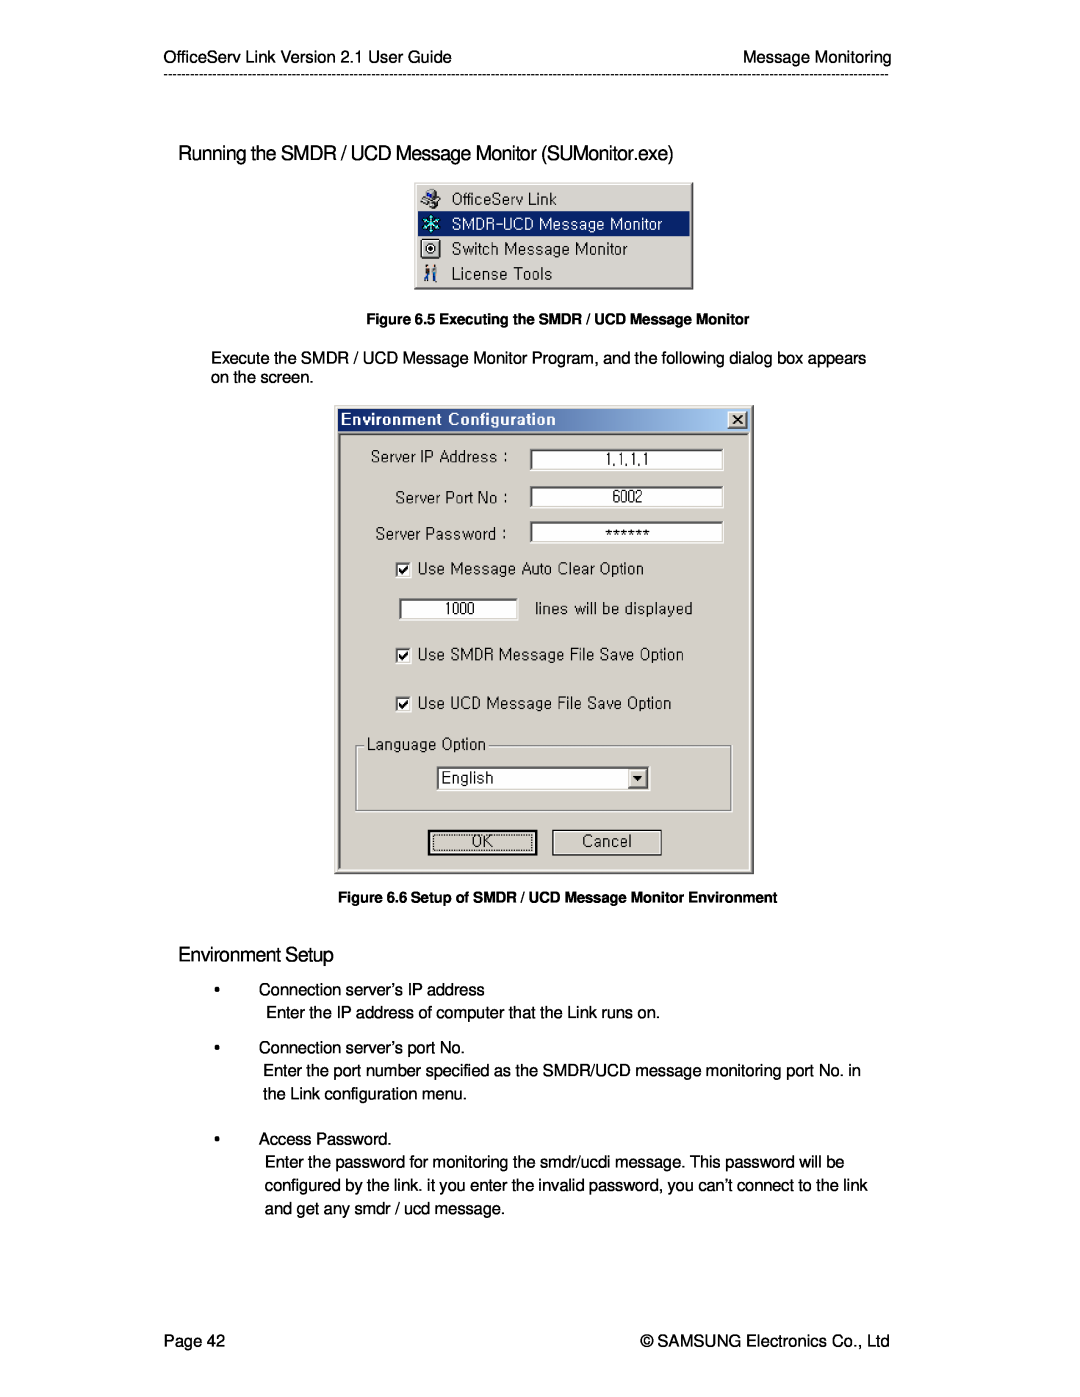 Samsung Version 2.1 manual Running the SMDR / UCD Message Monitor SUMonitor.exe, Environment Setup 